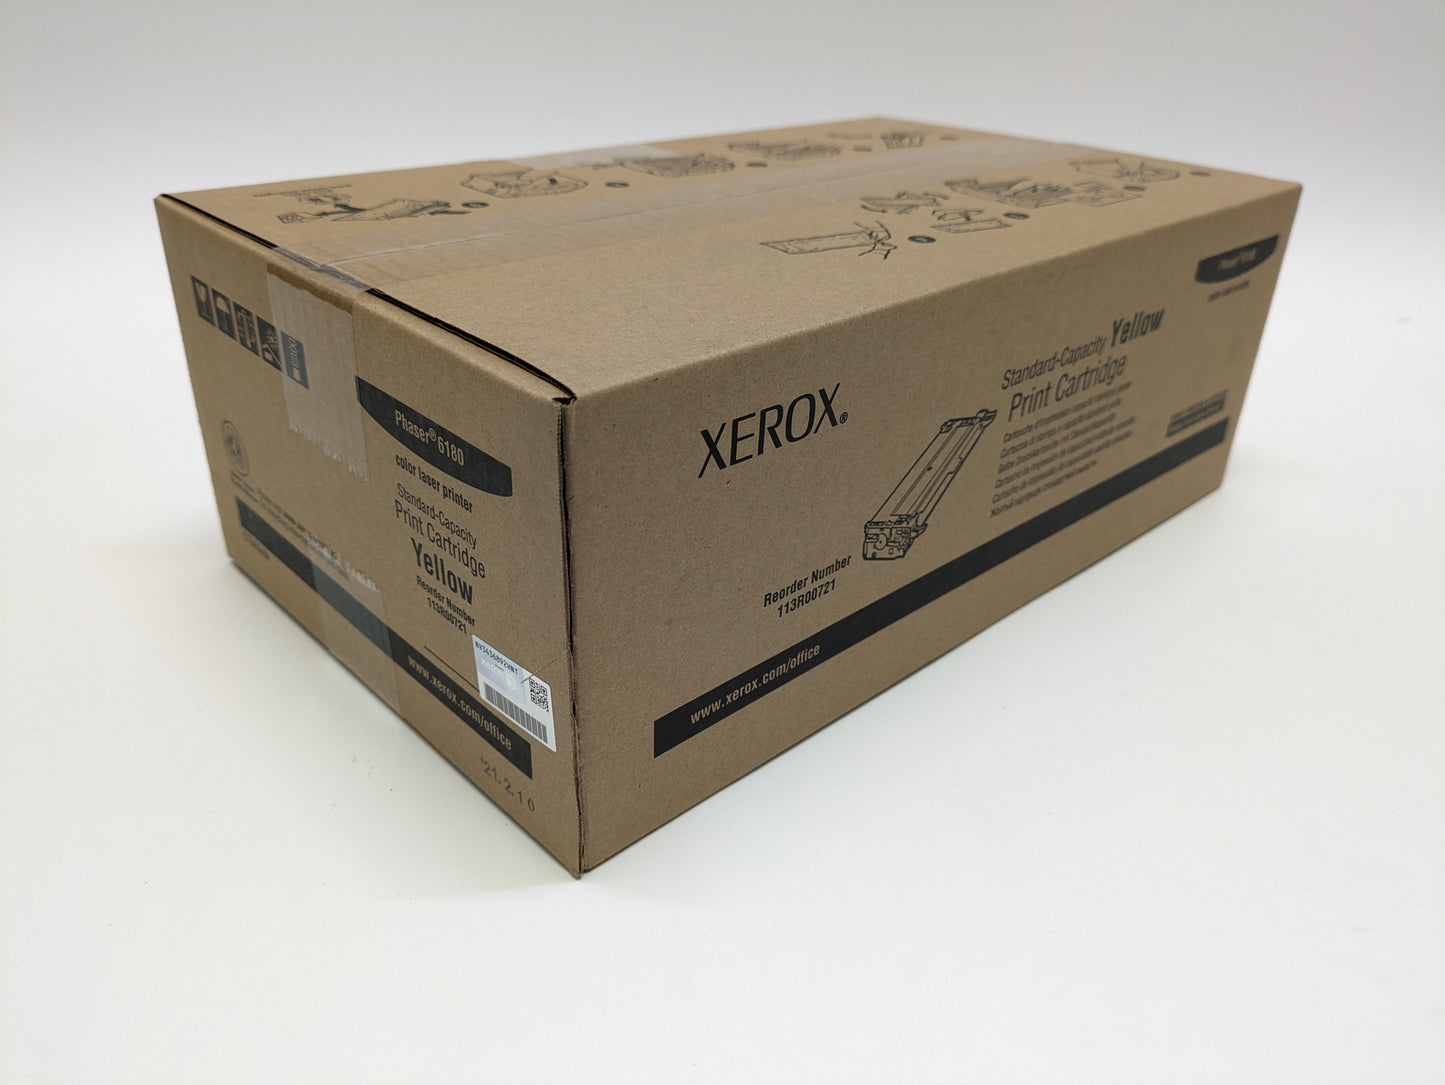 Xerox Phaser 6180 Yellow Print Cartridge - 113R00721 New